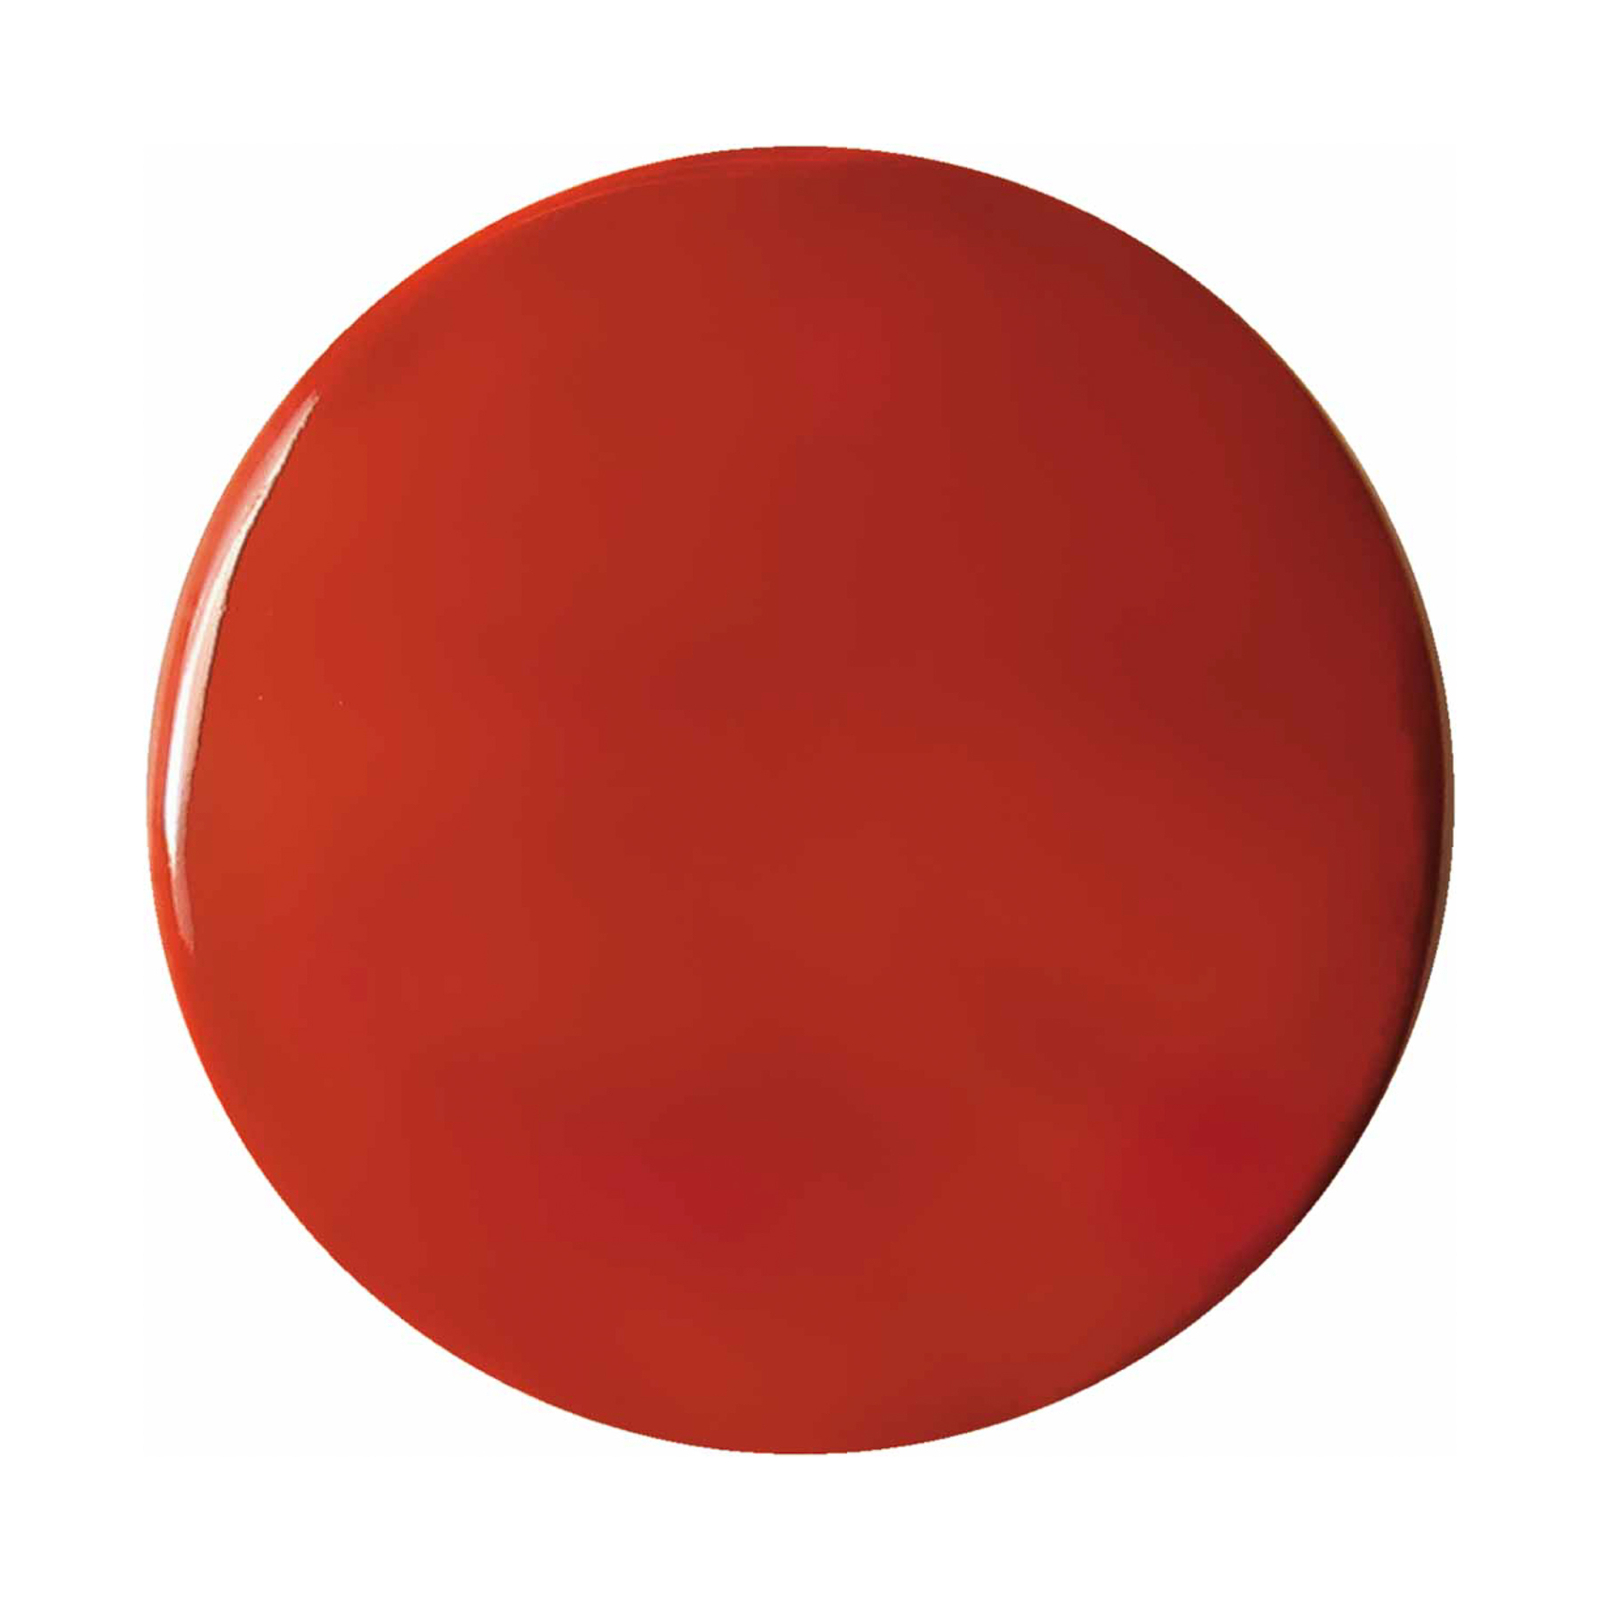 Hängelampe Ayrton, Keramik, Länge 29 cm, rot